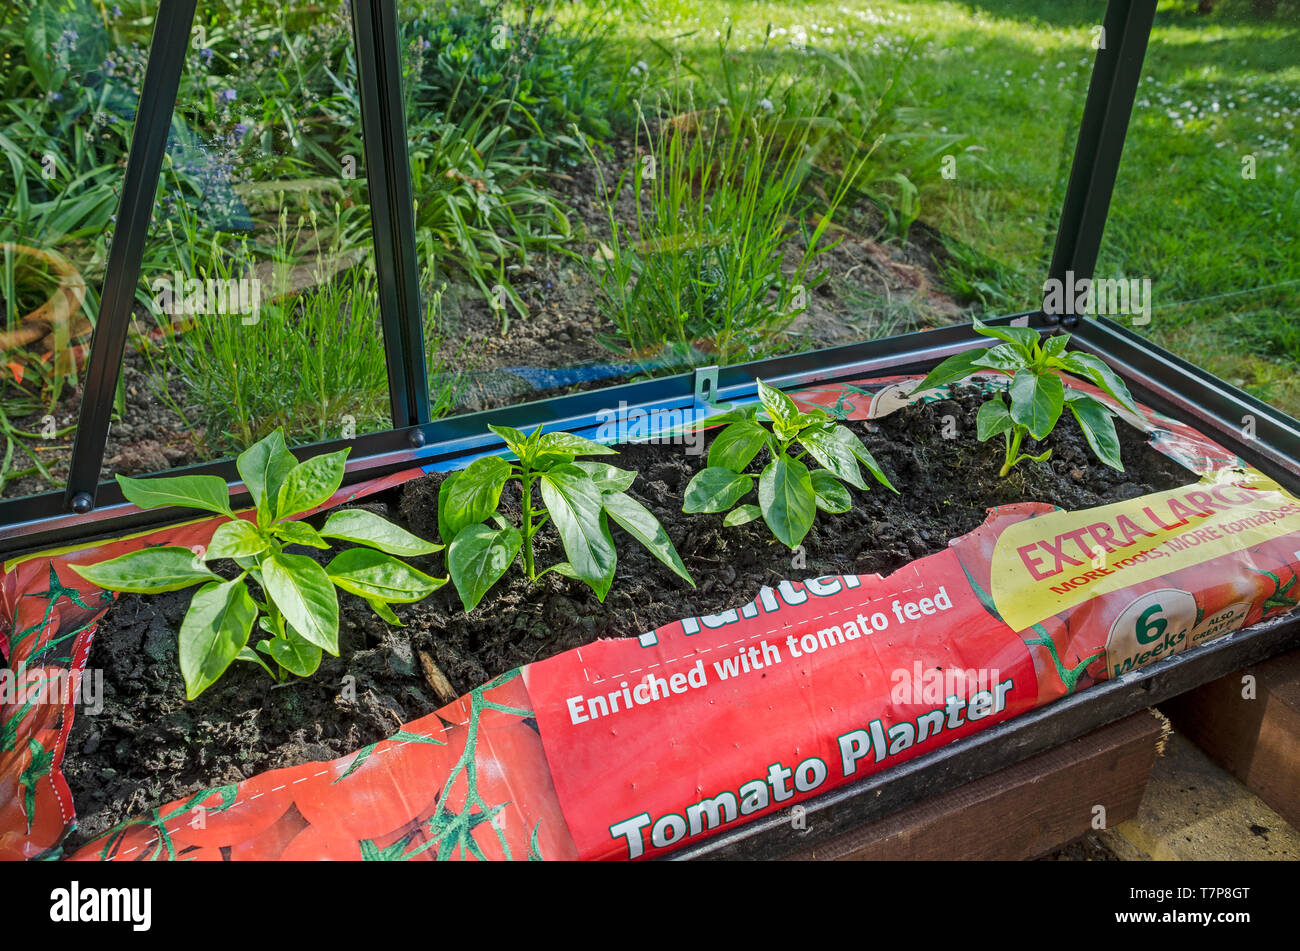 https://c8.alamy.com/comp/T7P8GT/pepper-plants-in-grow-bag-in-green-house-T7P8GT.jpg